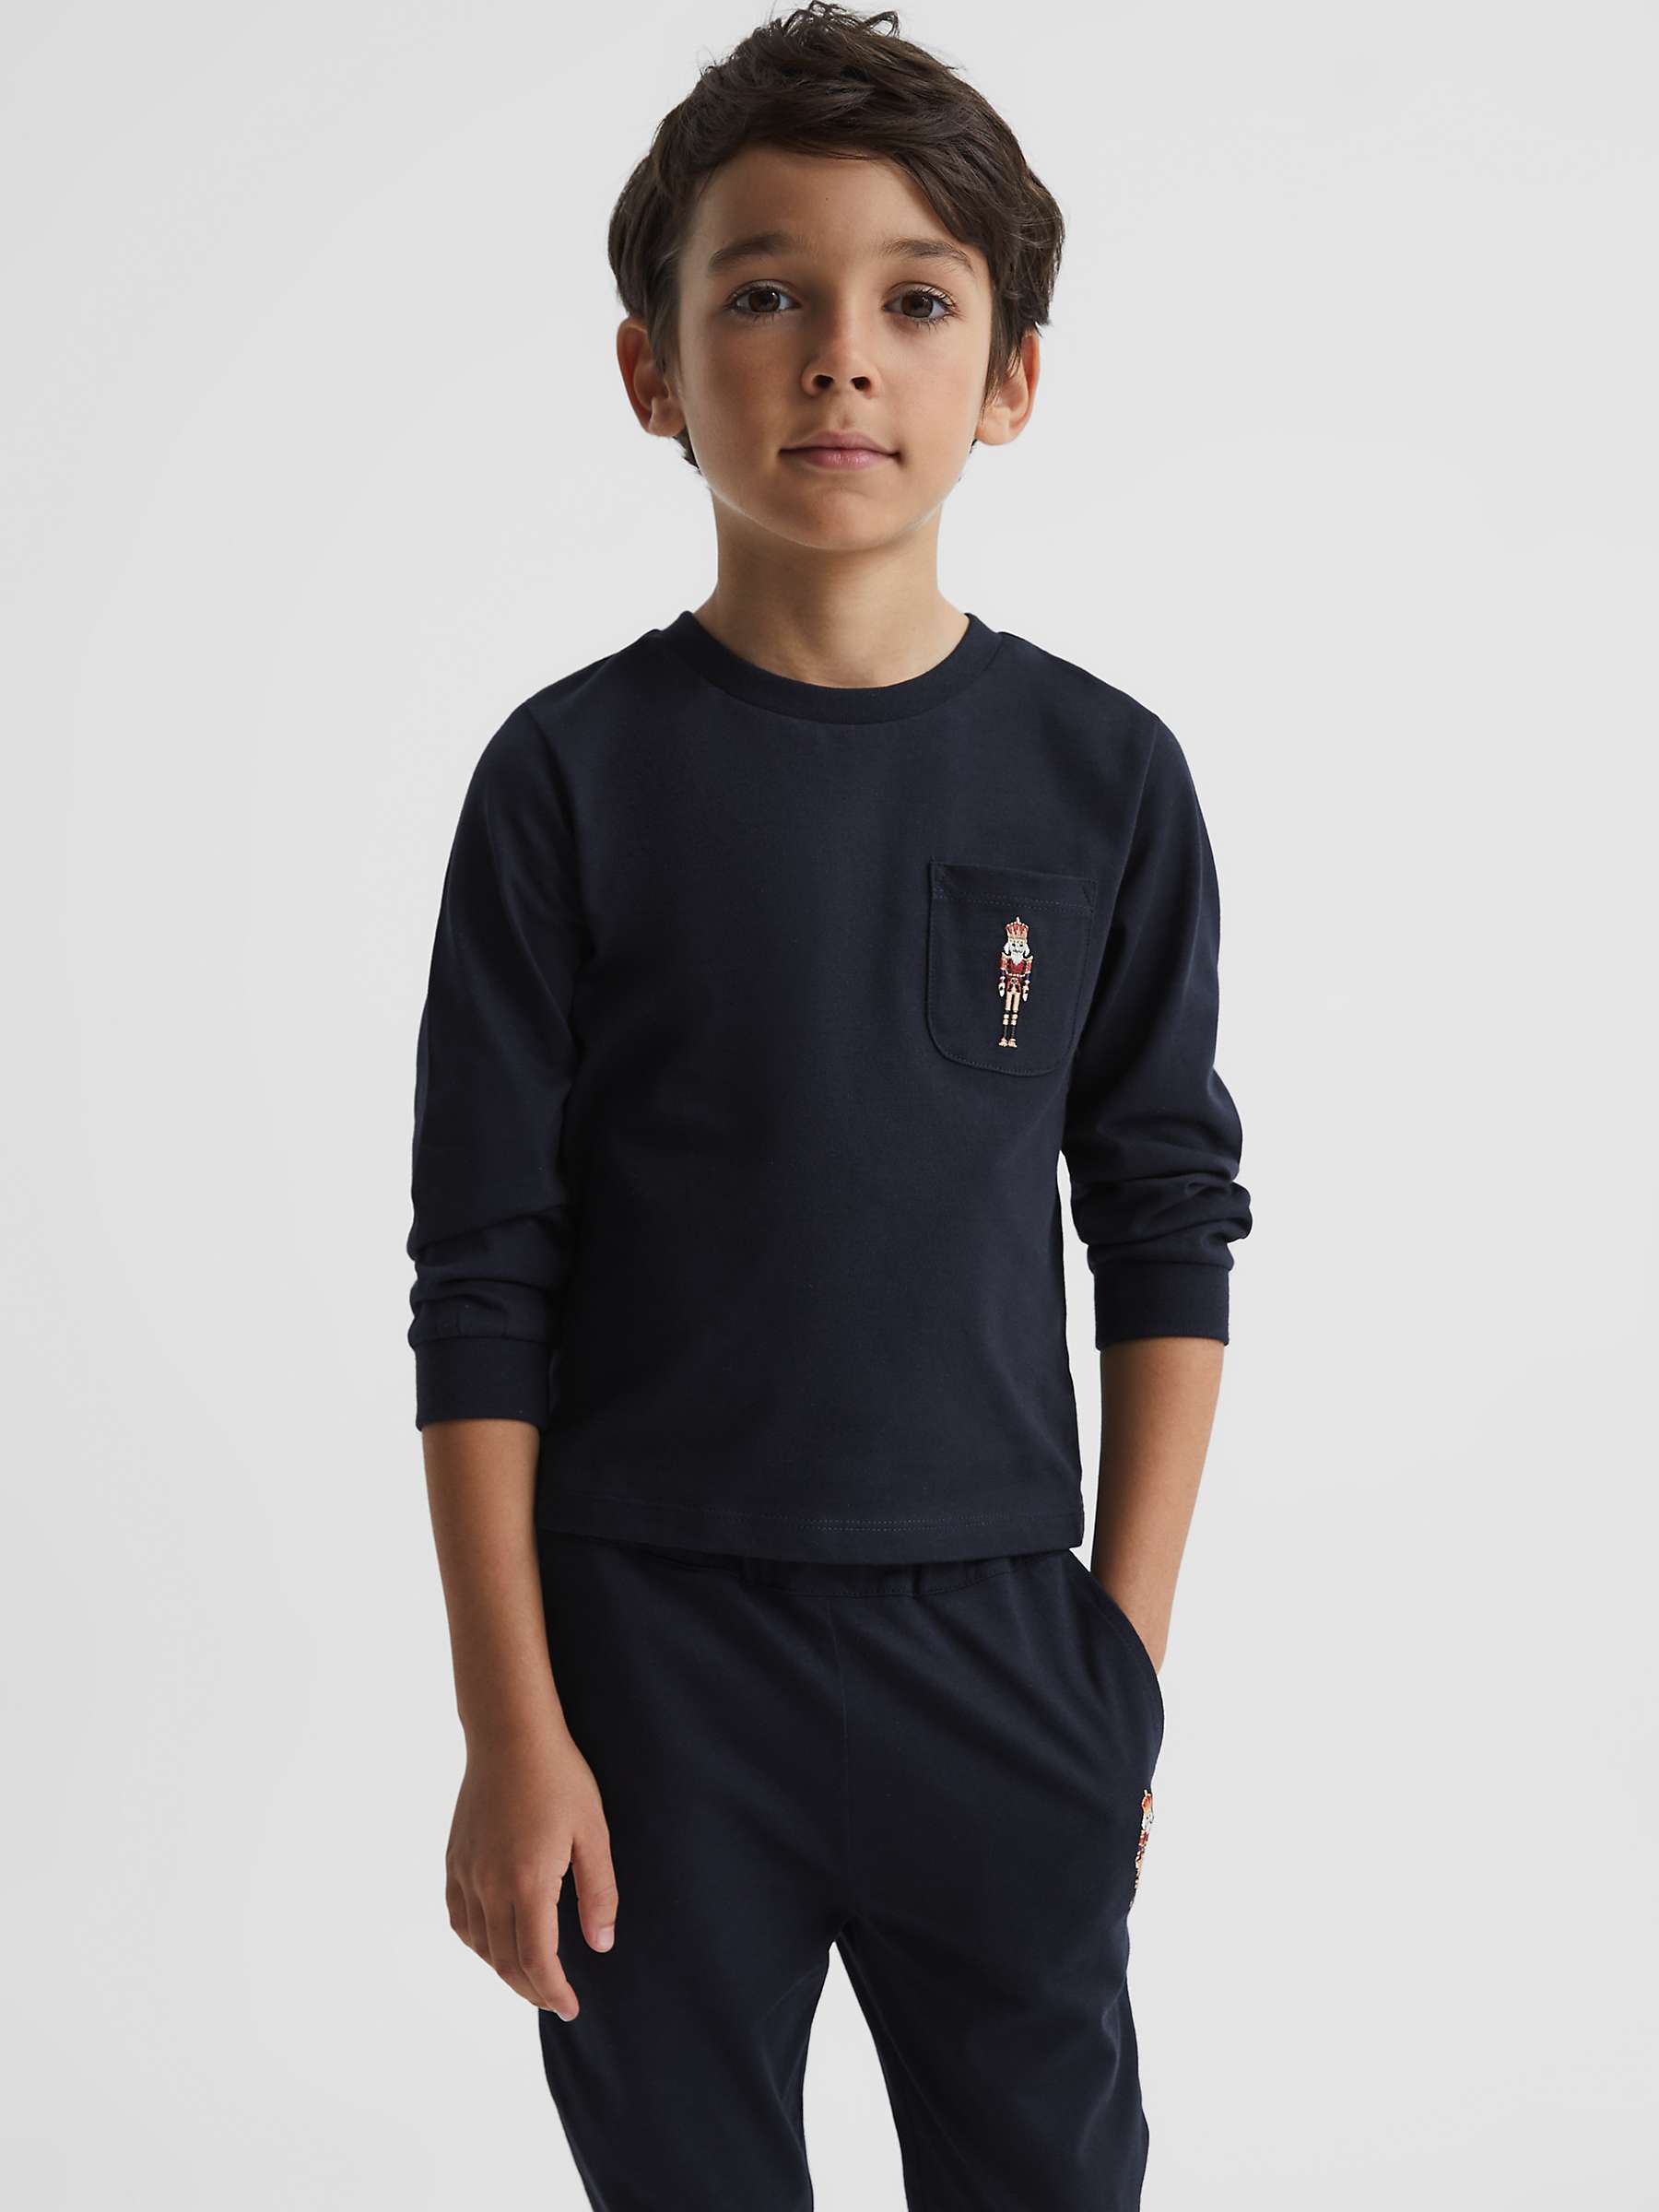 Reiss Kids' Will Nutcracker Embroidered Sweatshirt, Navy at John Lewis ...